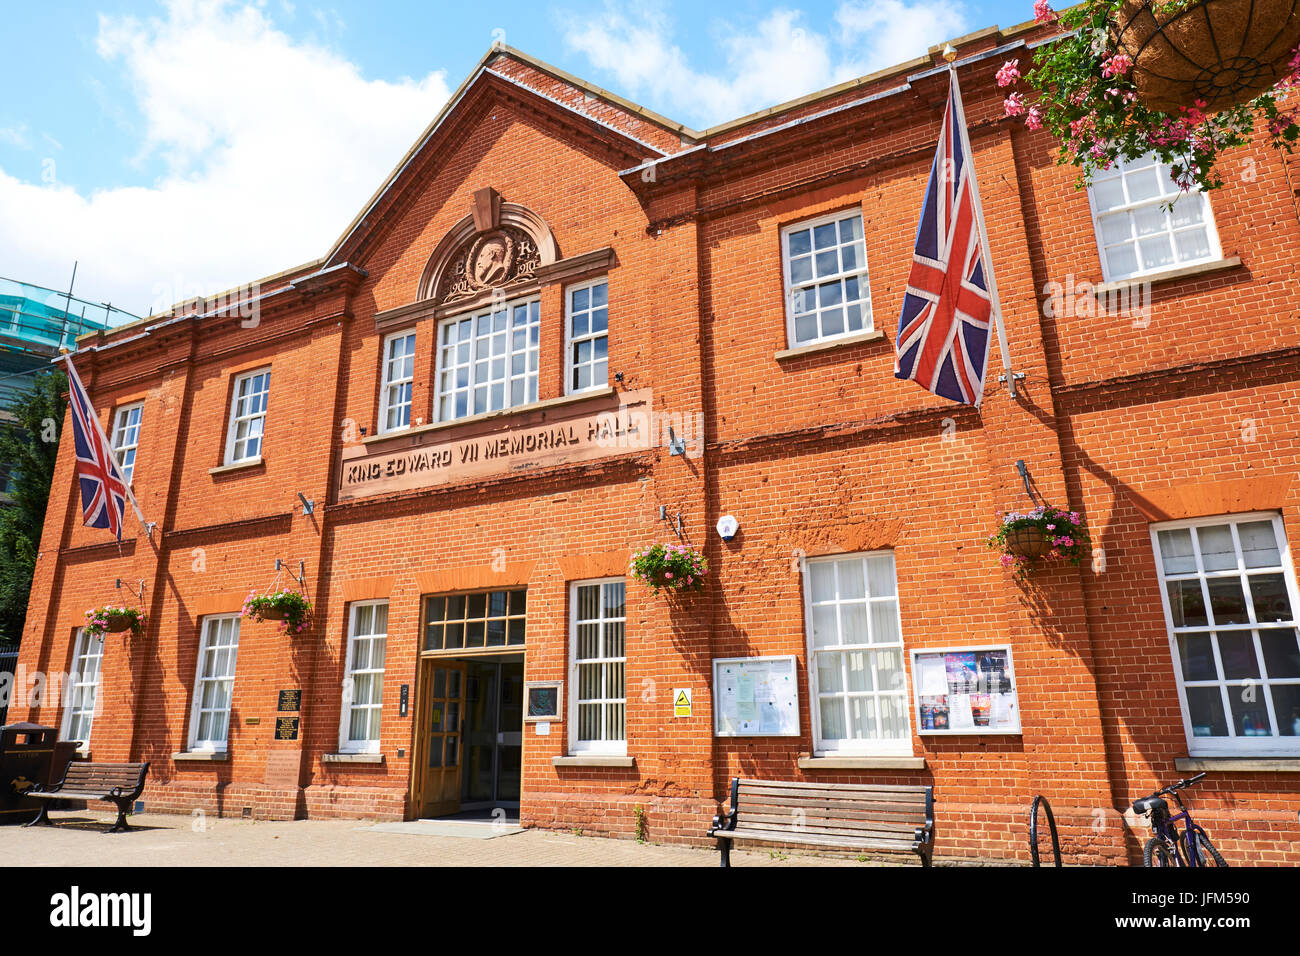 King Edward VII Memorial Hall, High Street, Newmarket, Suffolk, UK Stock Photo